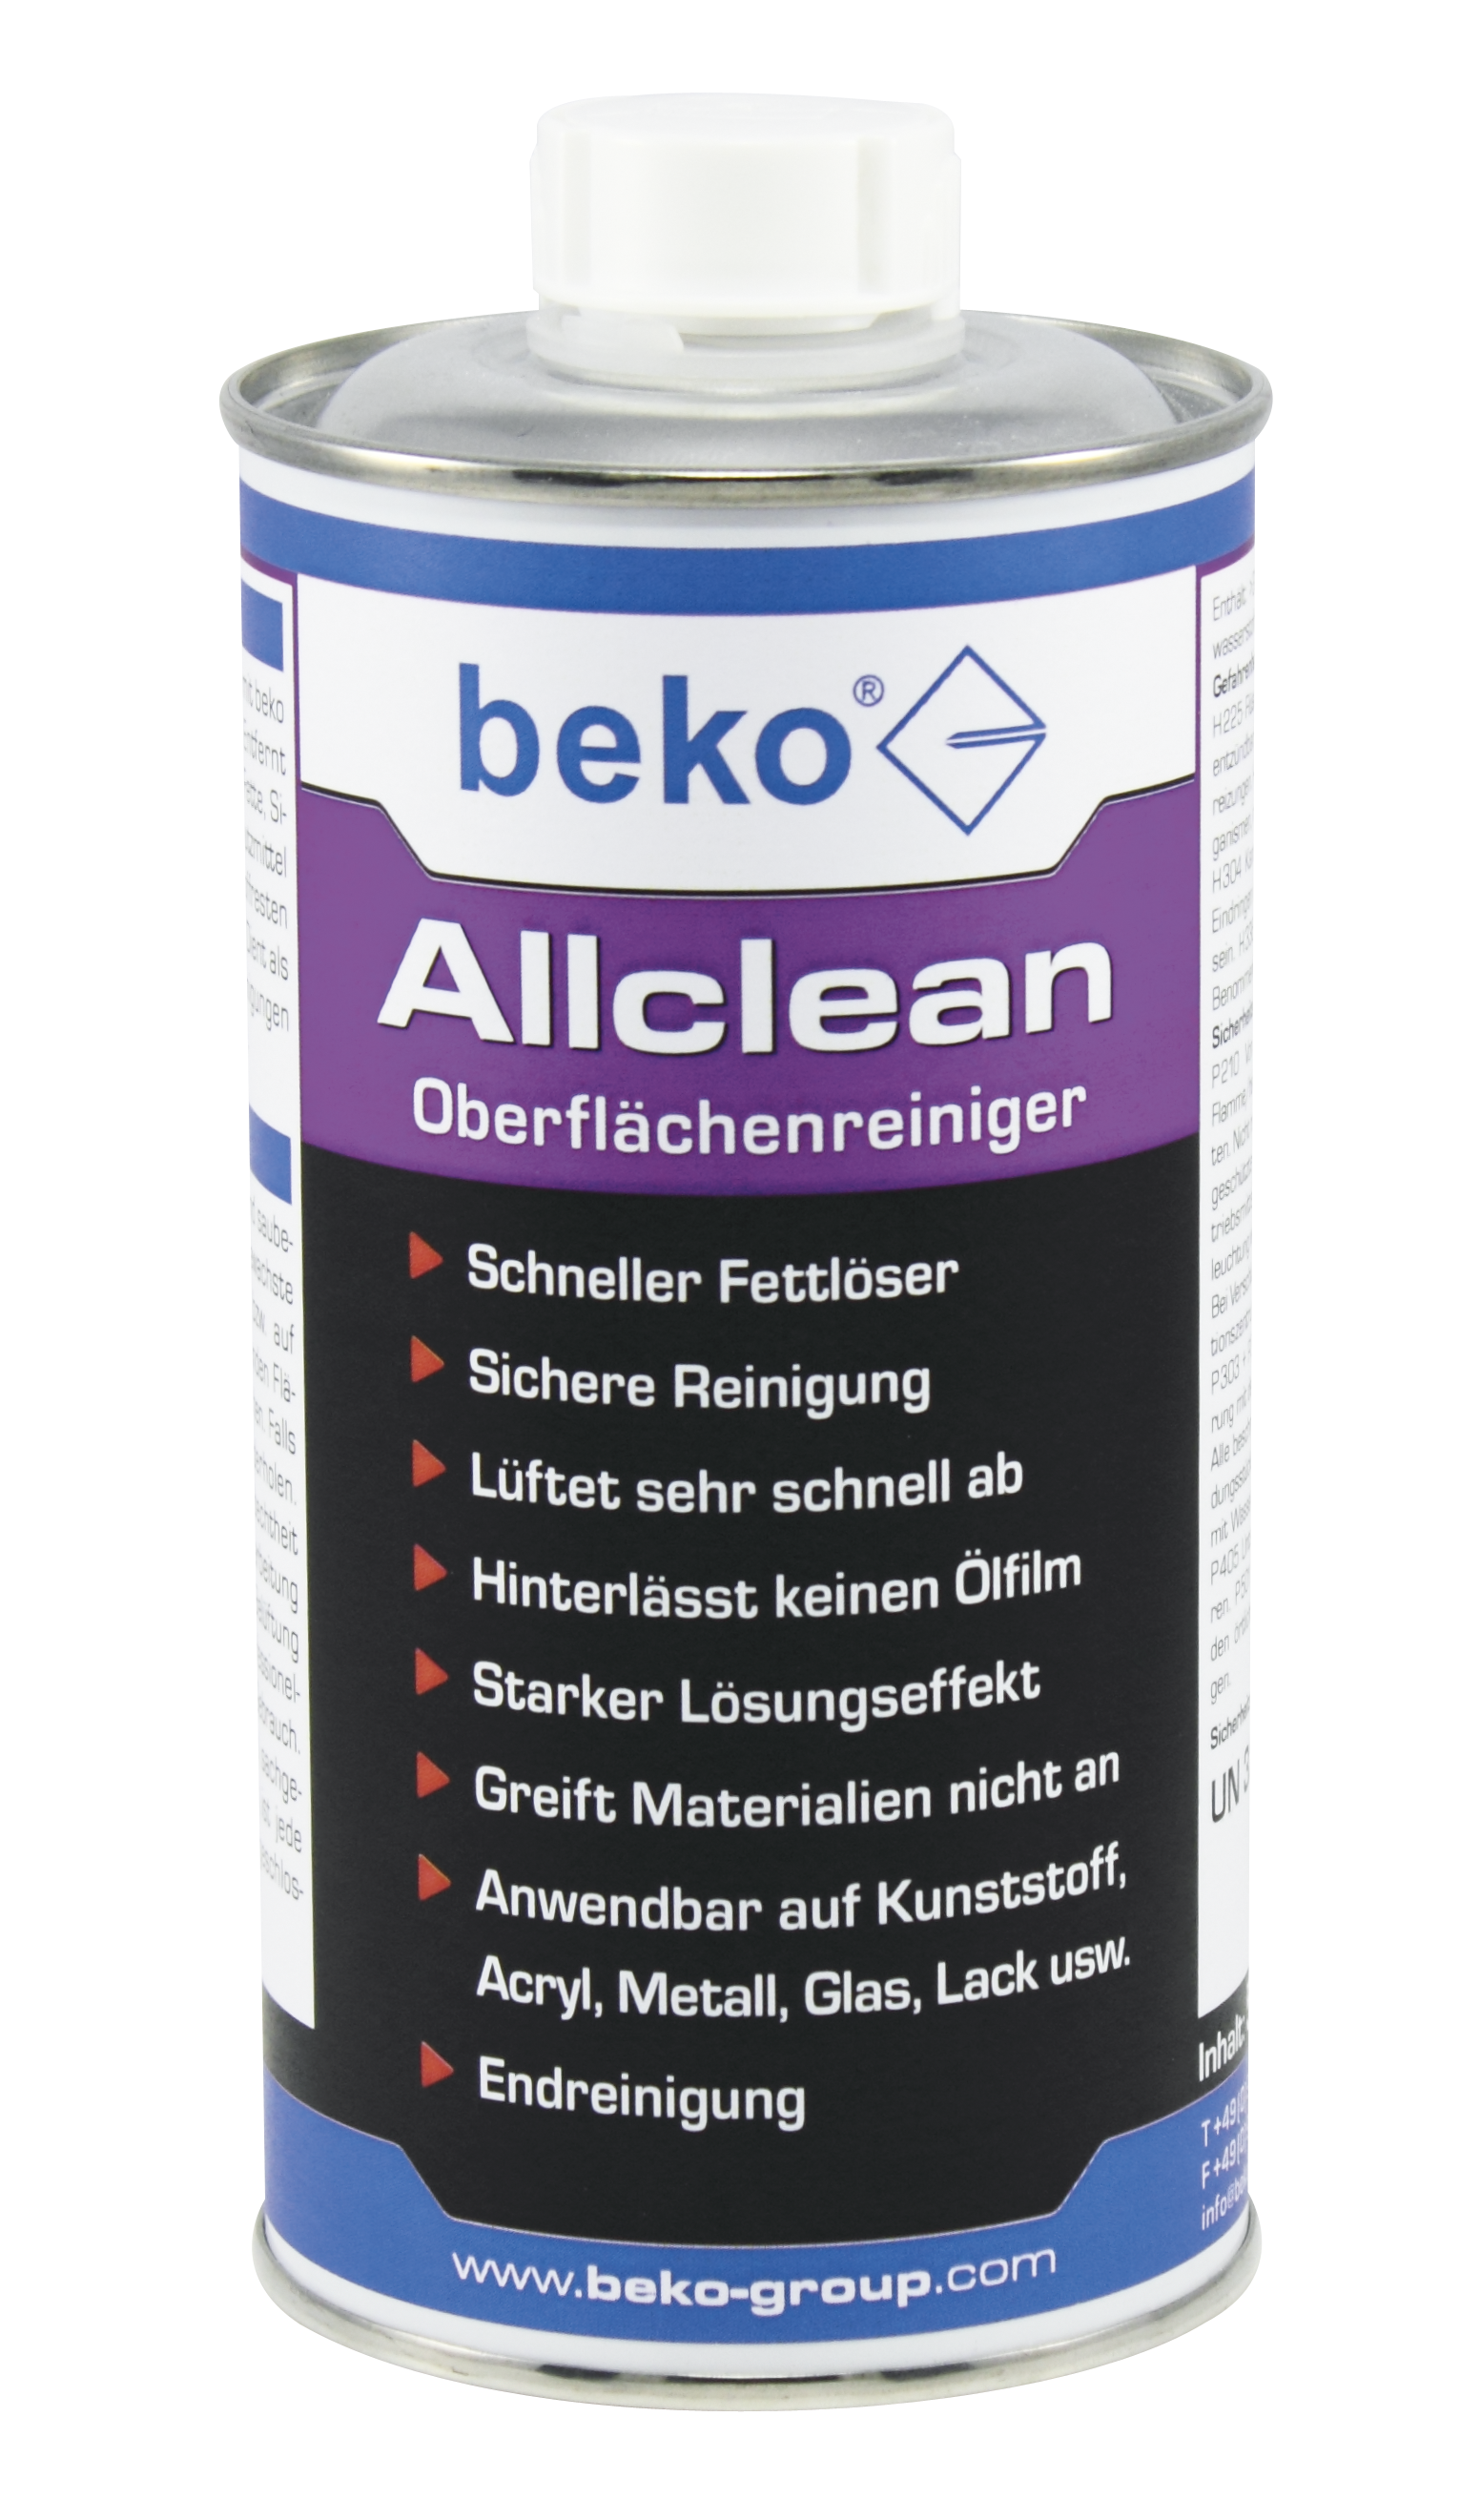 beko® Allclean Oberflächenreiniger, 500 ml